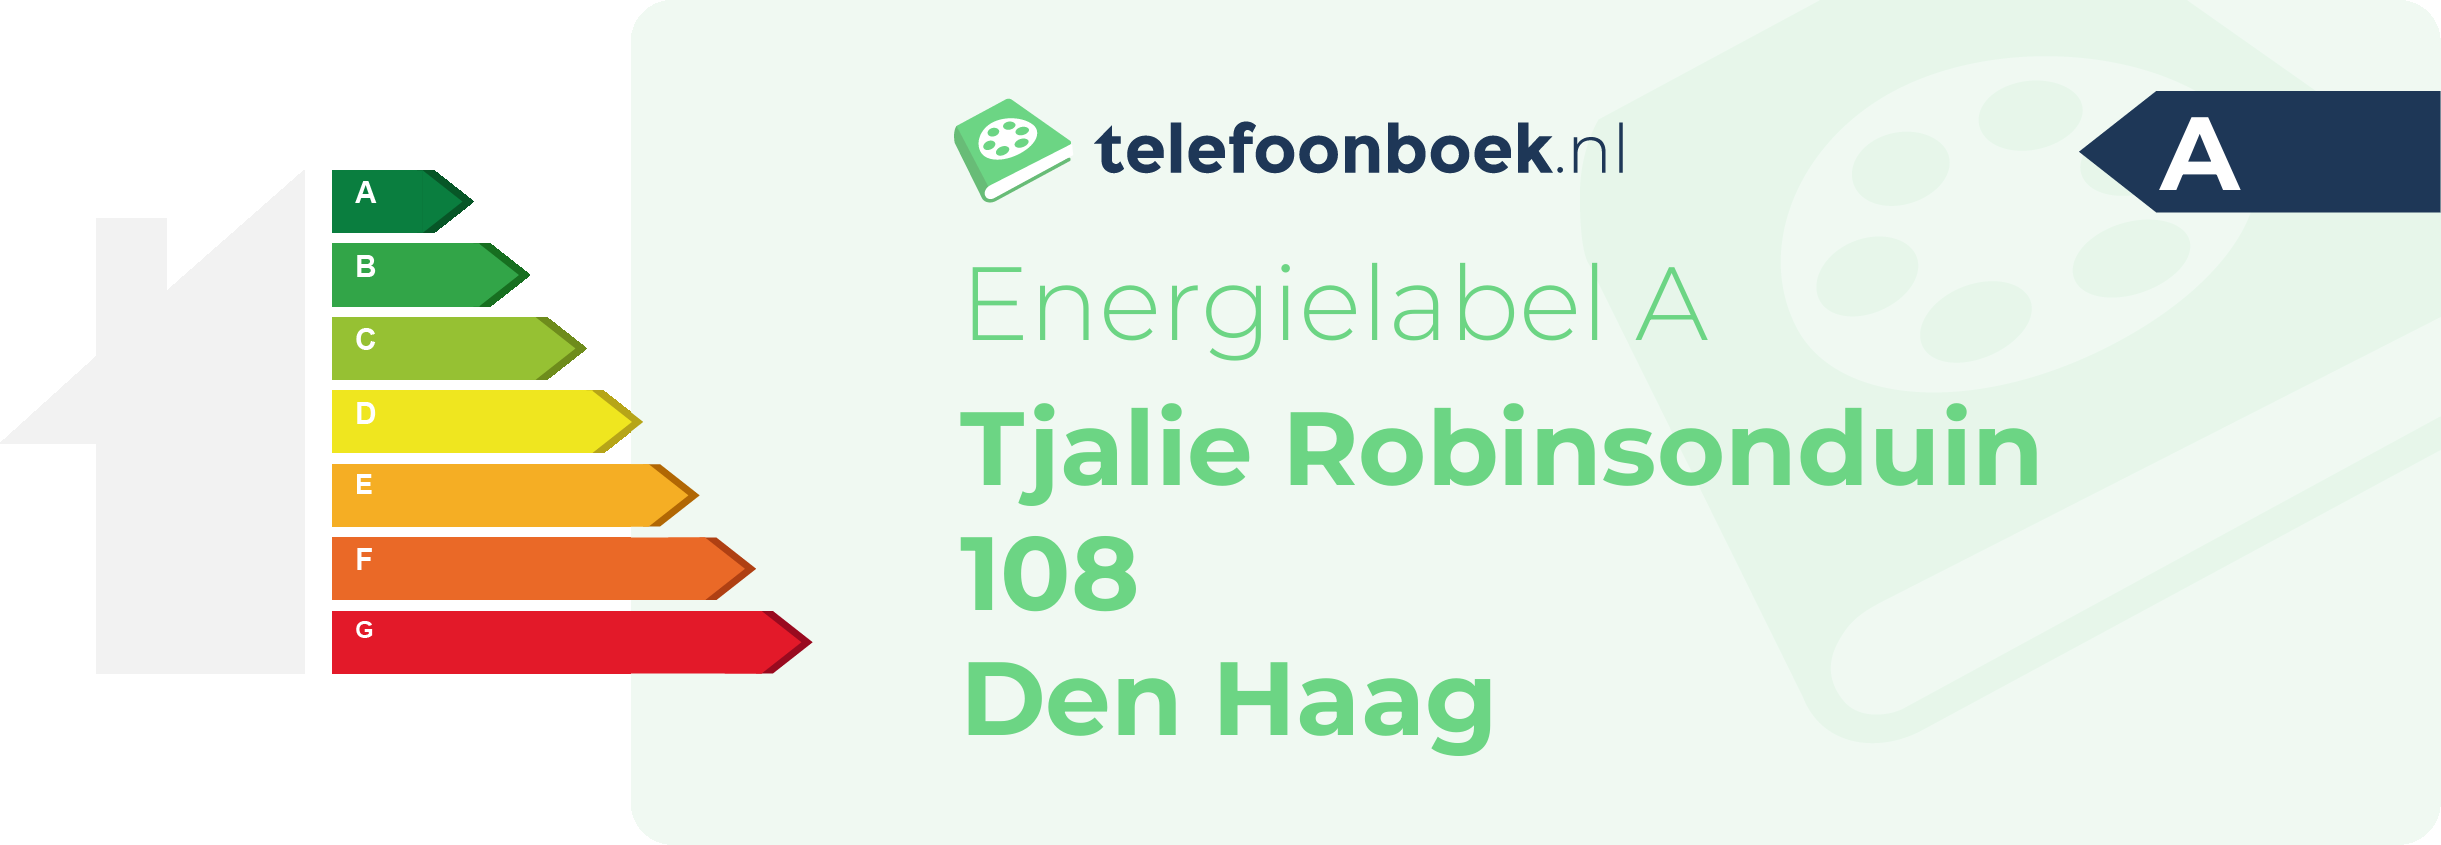 Energielabel Tjalie Robinsonduin 108 Den Haag